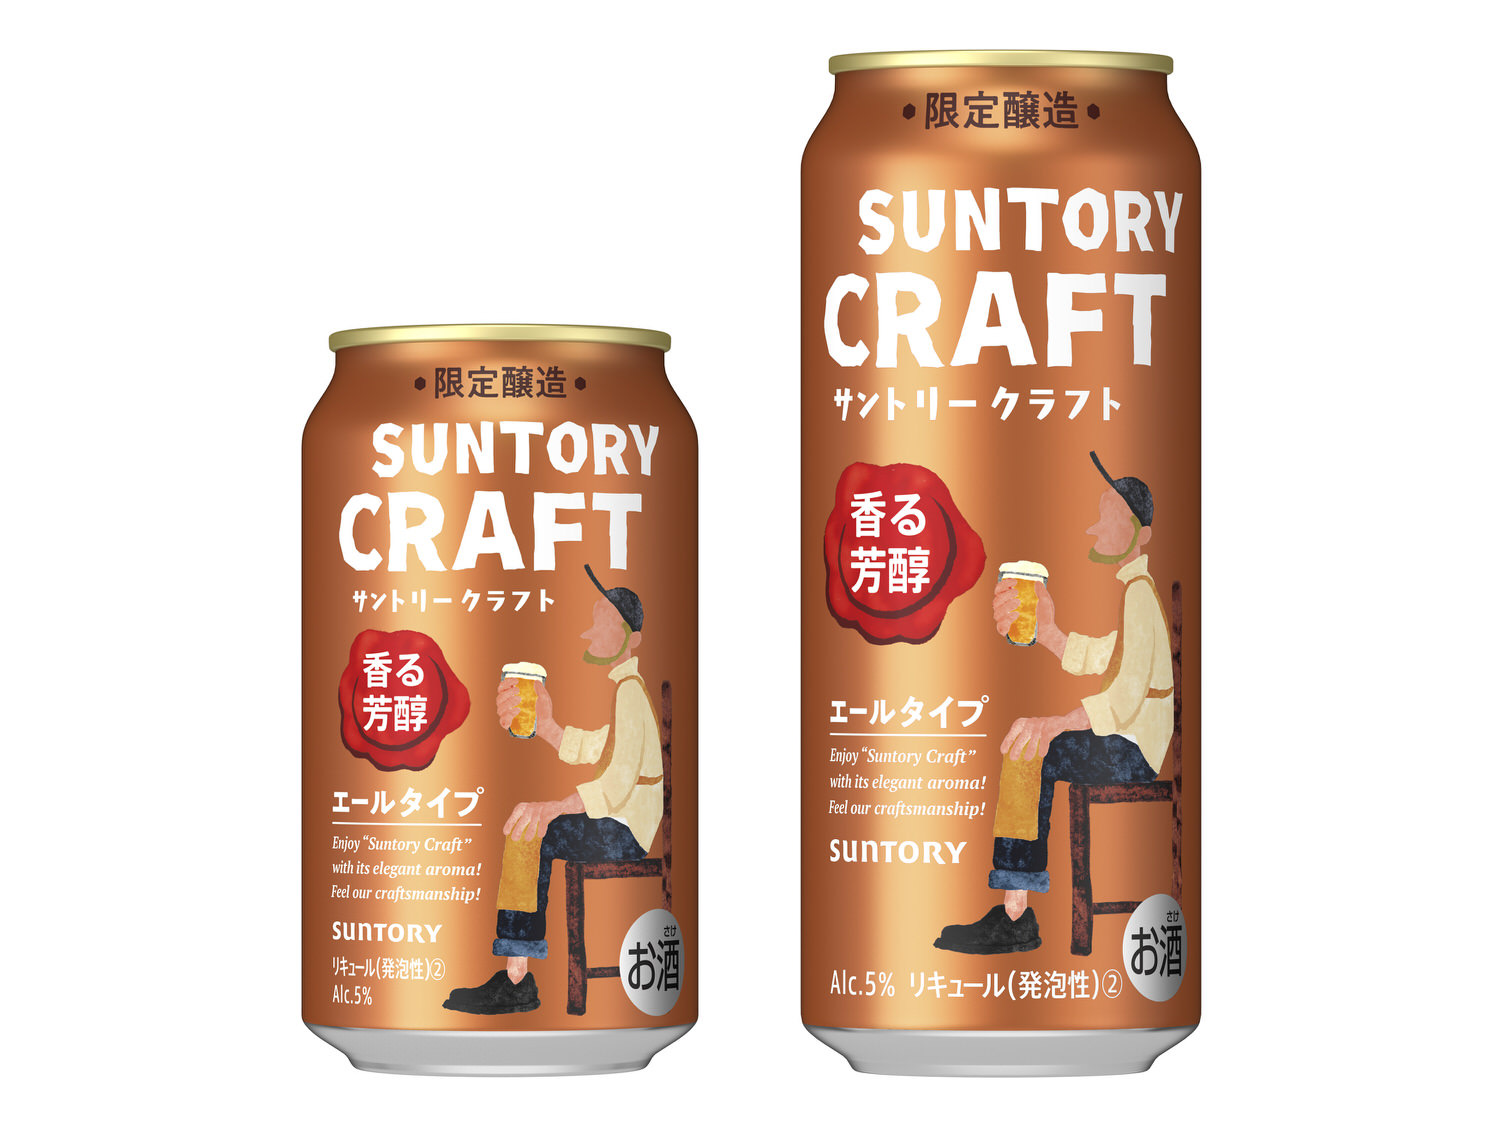 Suntory craft 07000